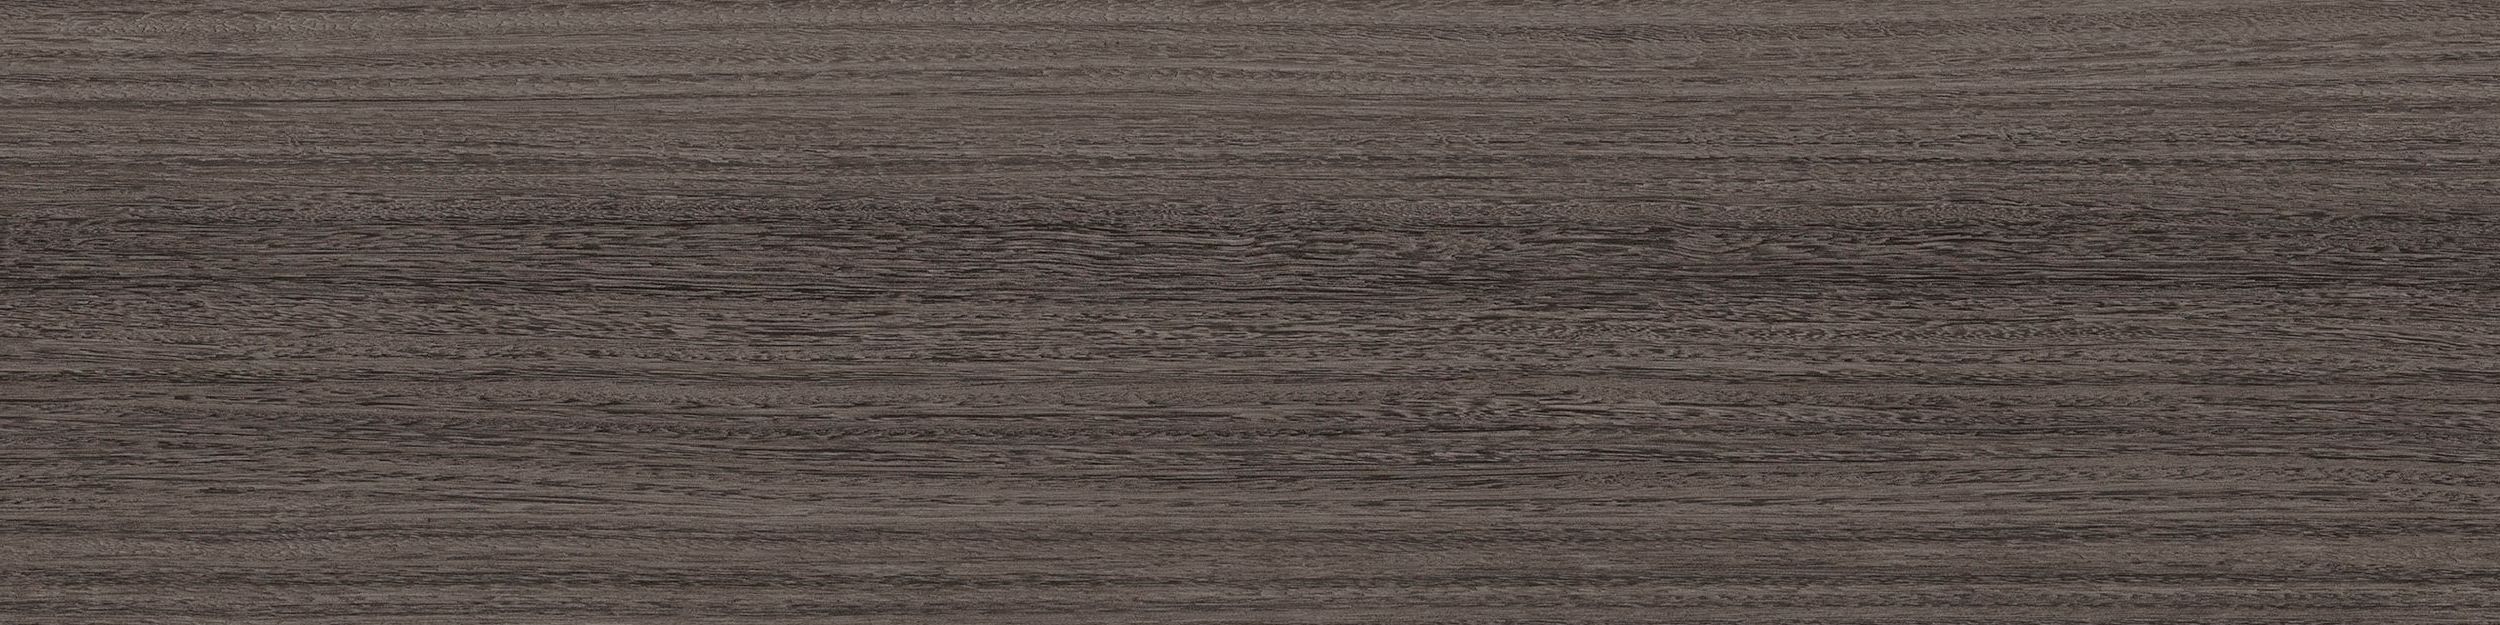 Textured Woodgrains LVT In Ironbark image number 1